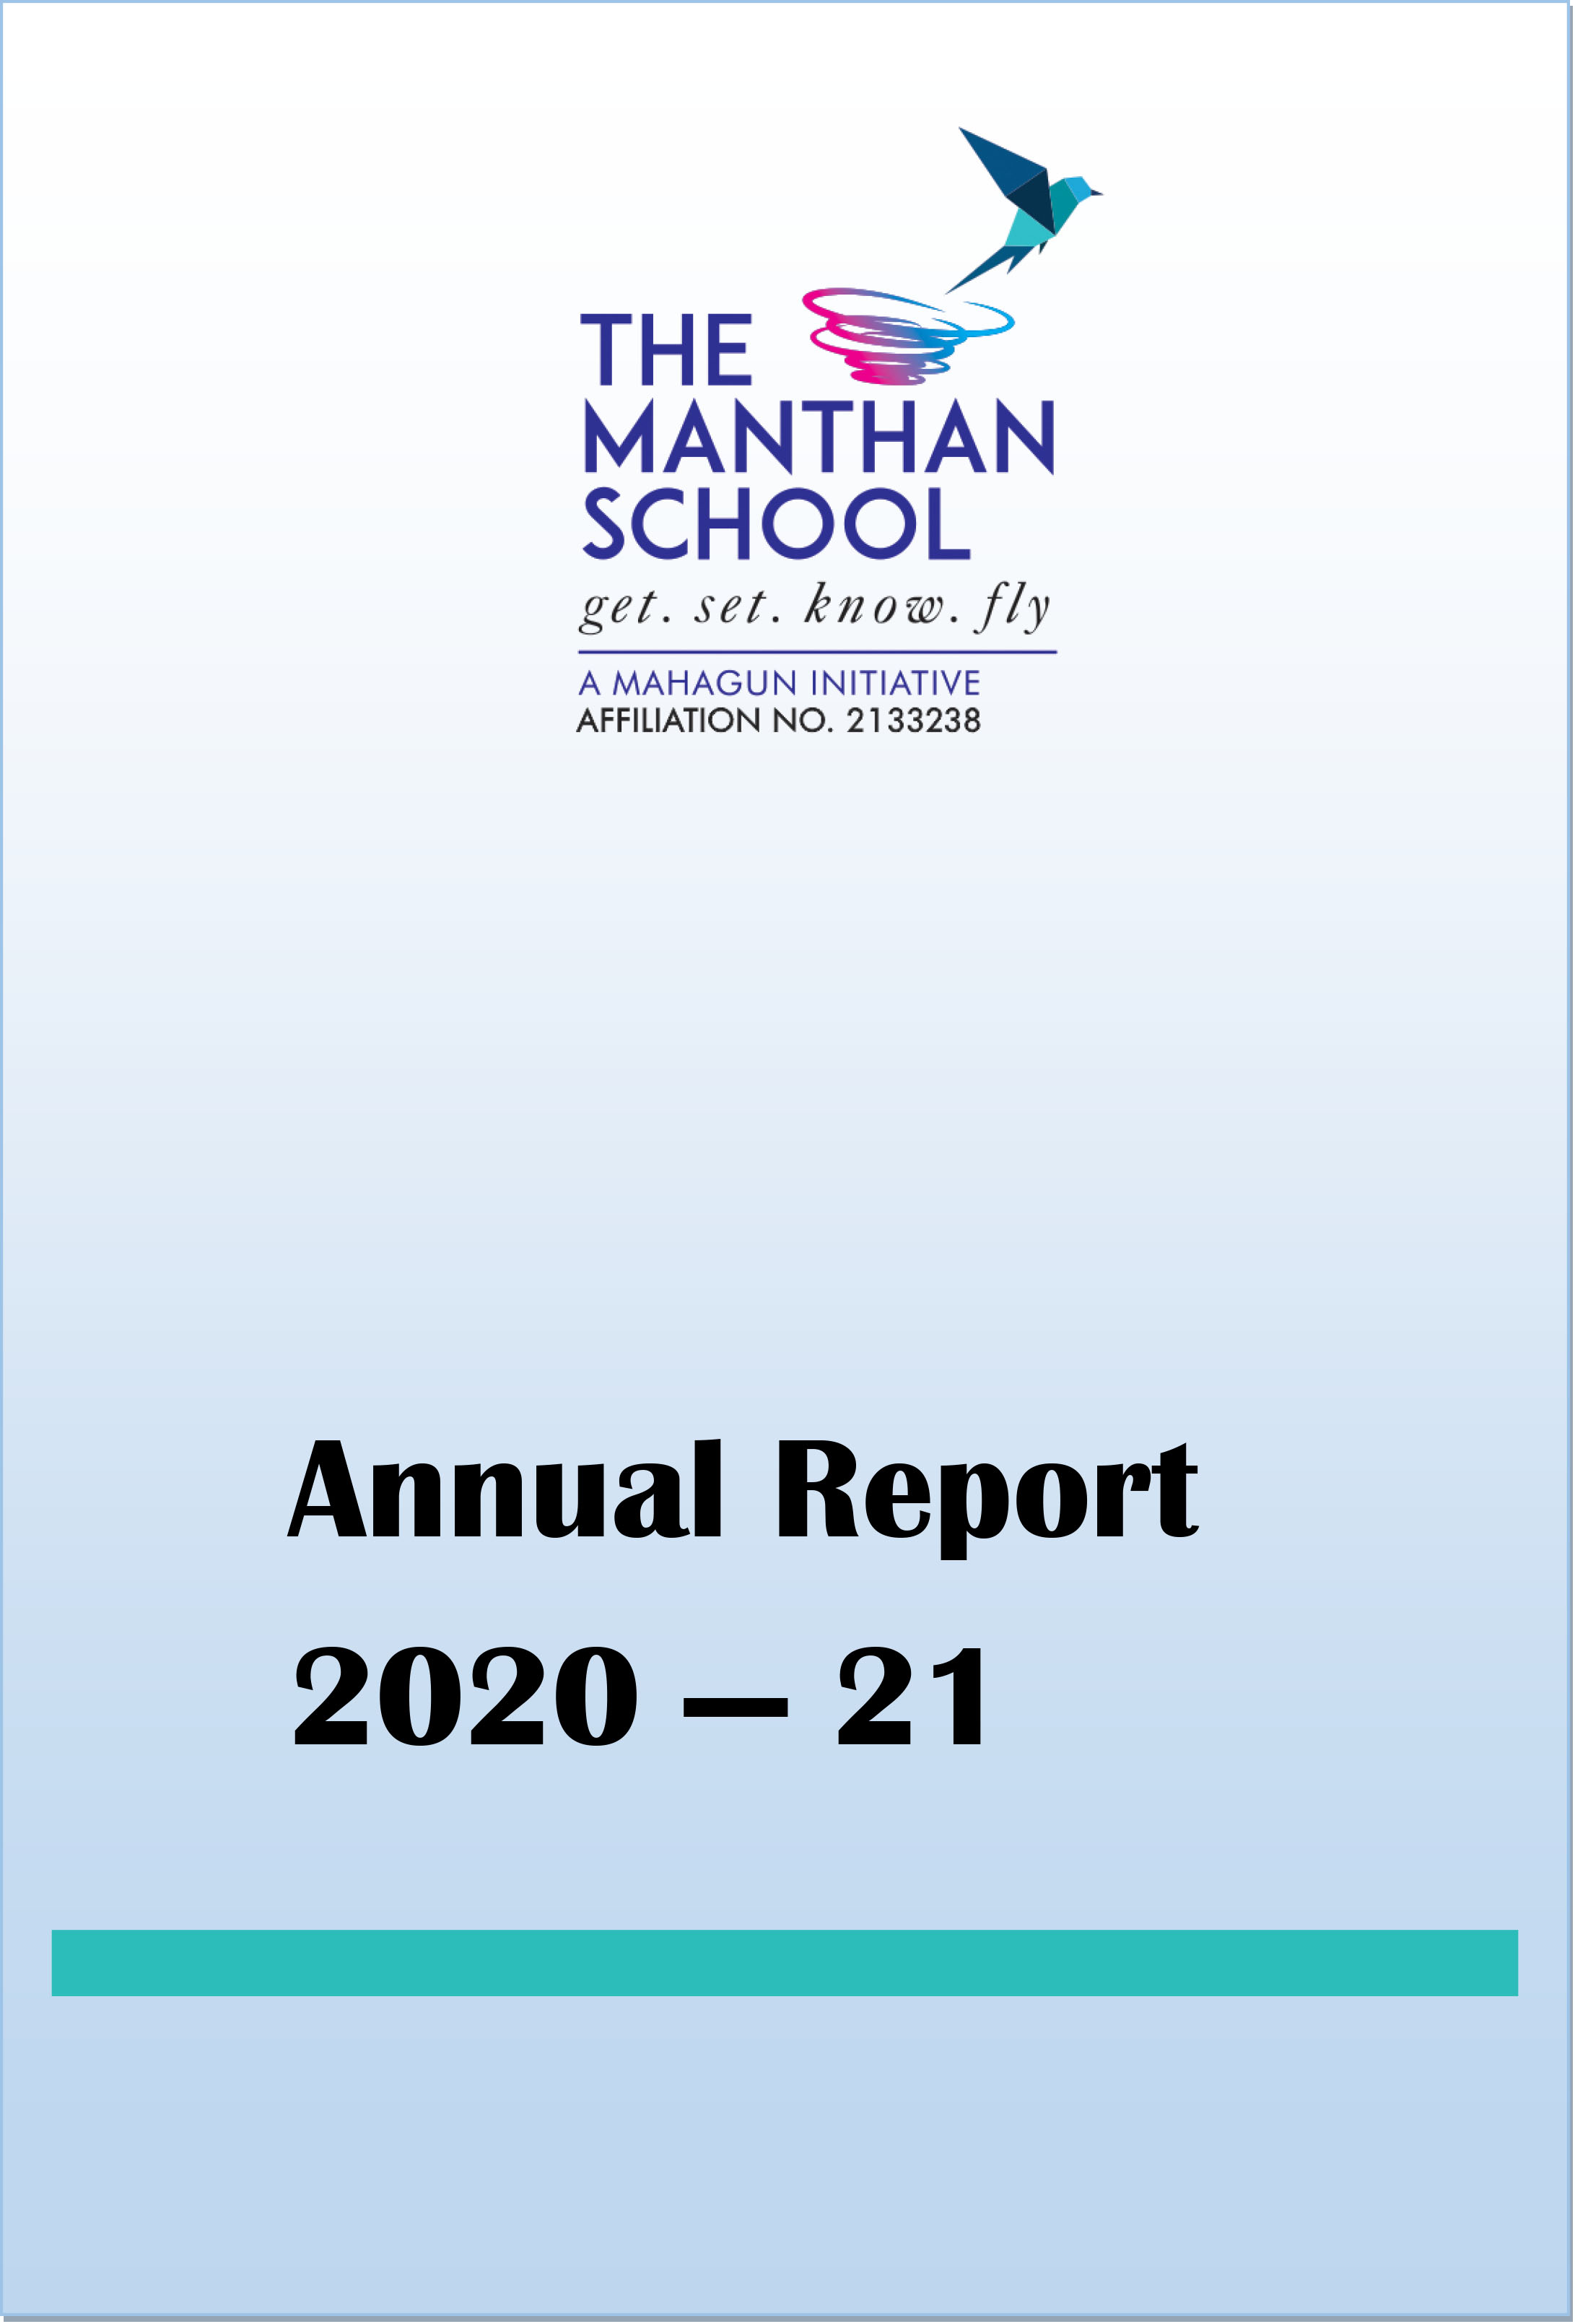 ANNUAL REPORT 2020-21